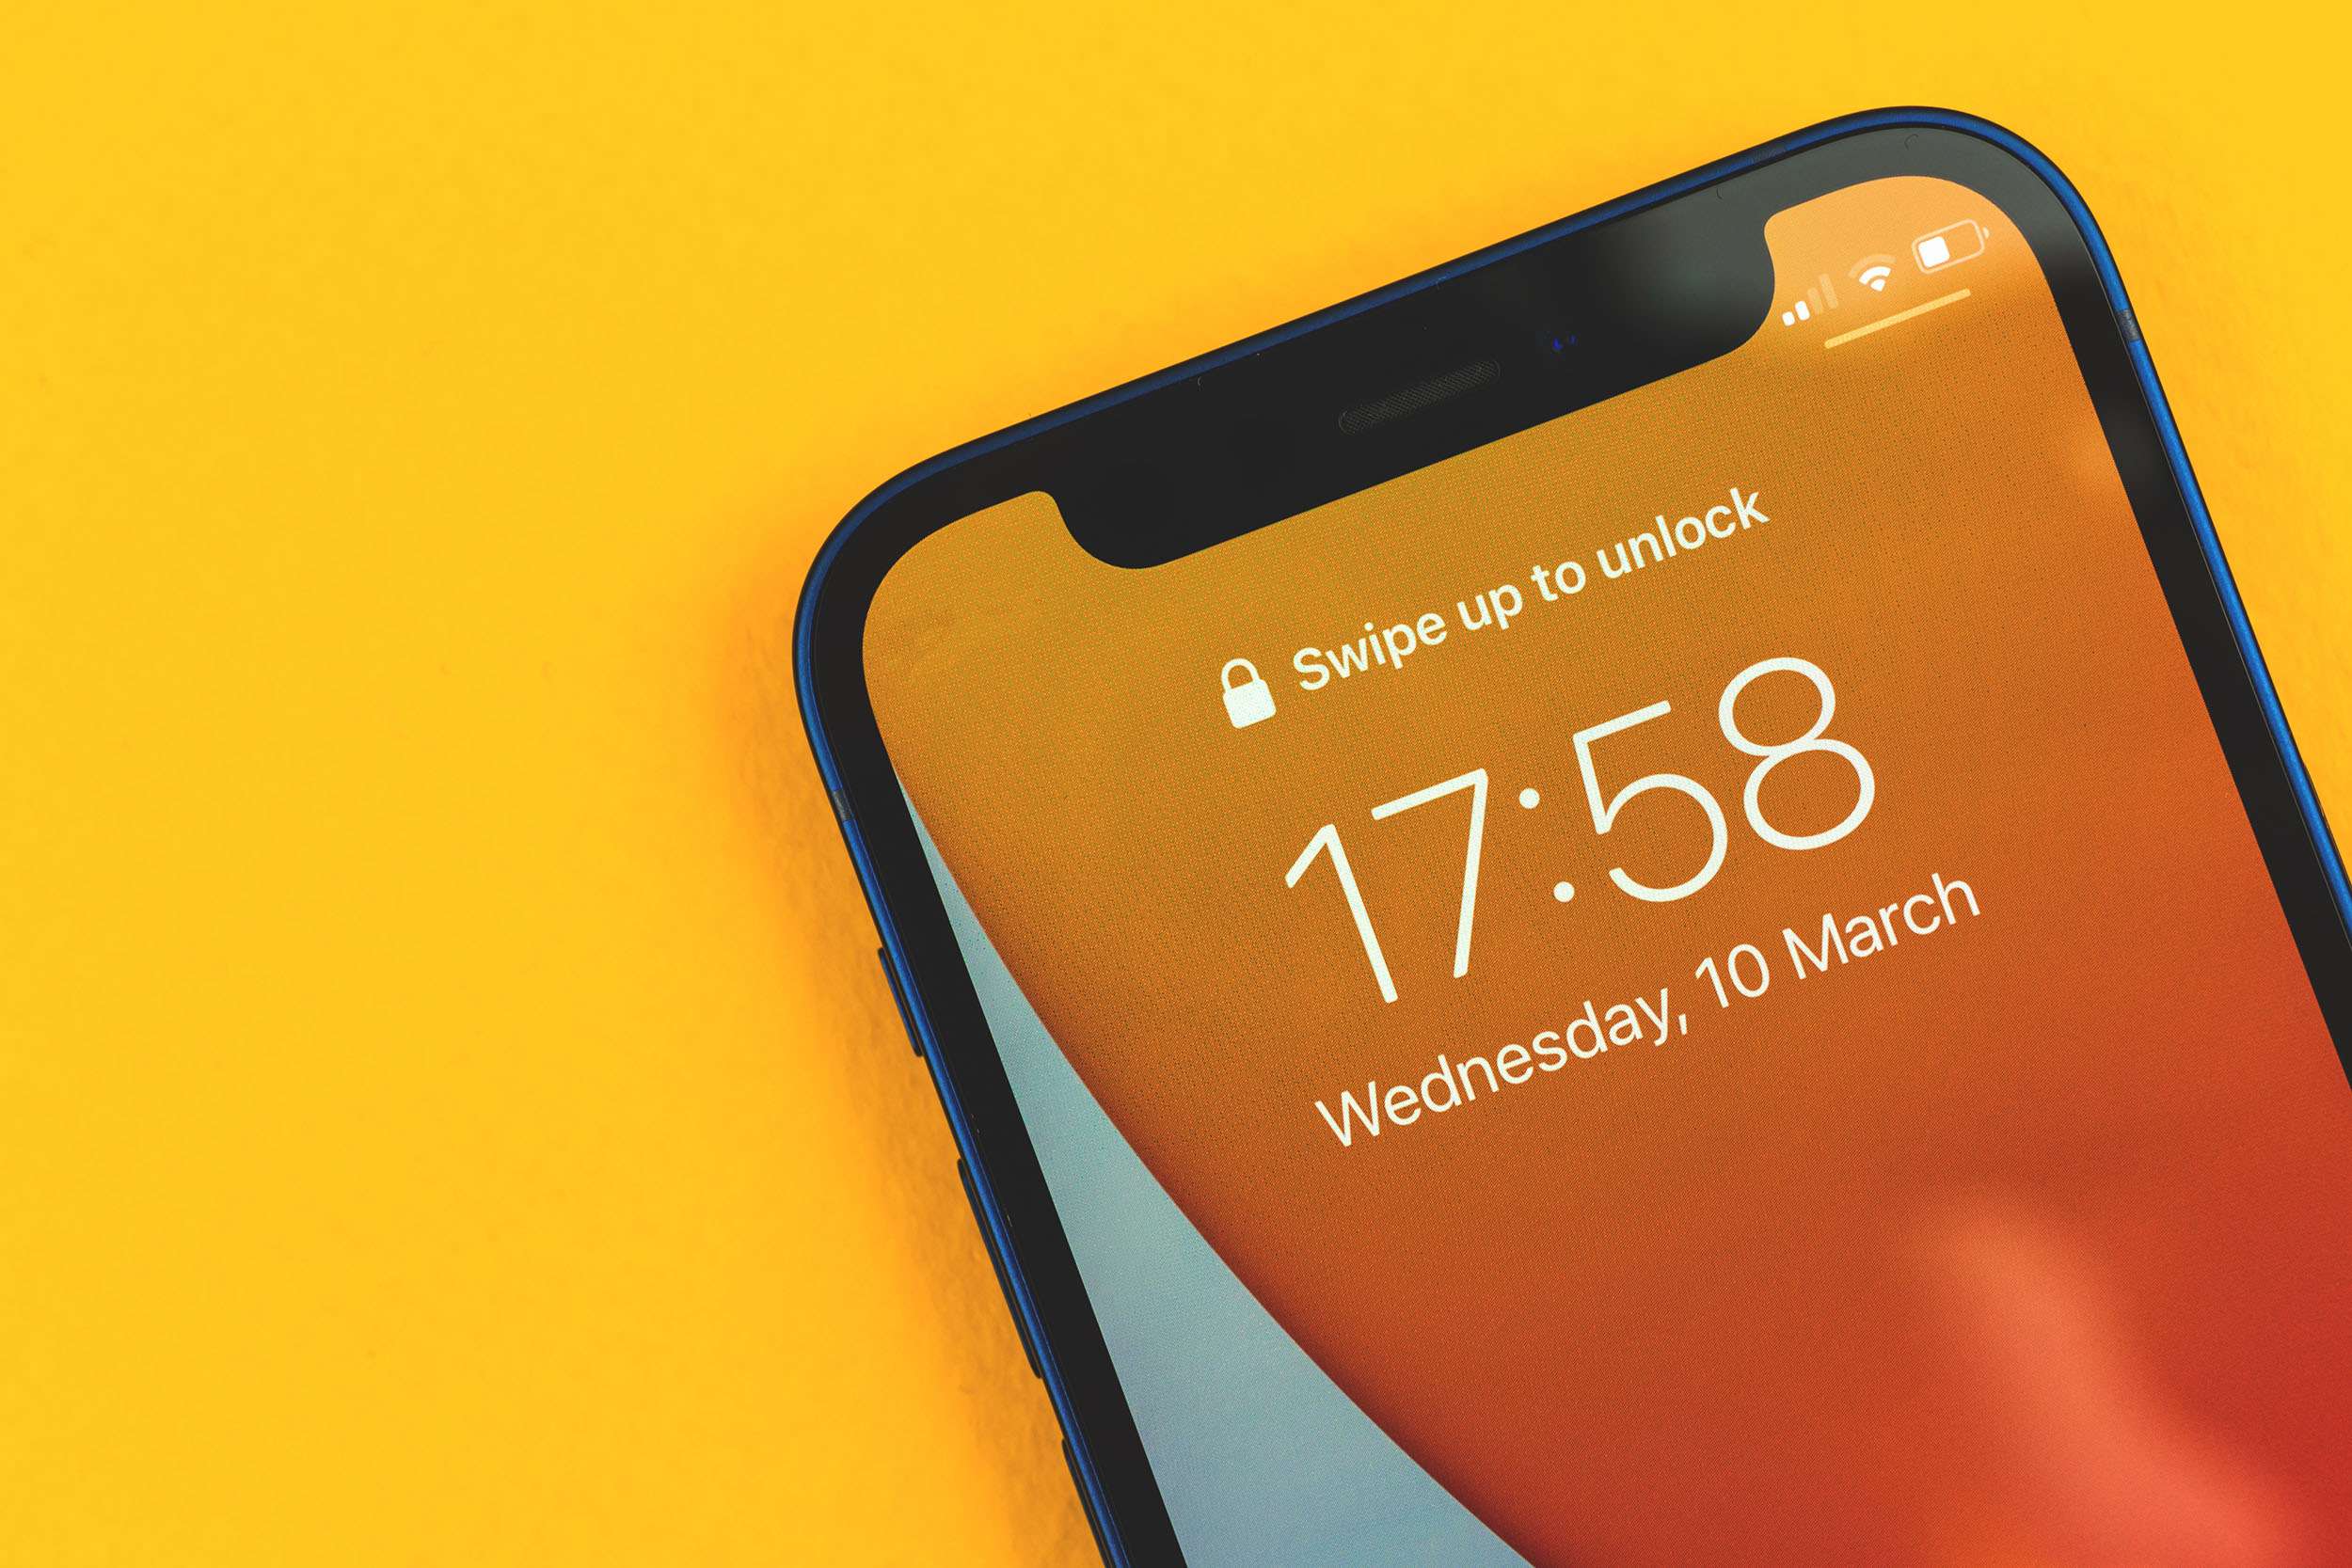 Kharkov, Ukraine - March 10, 2021: Apple iPhone with lockscreen, swipe to unlock message text